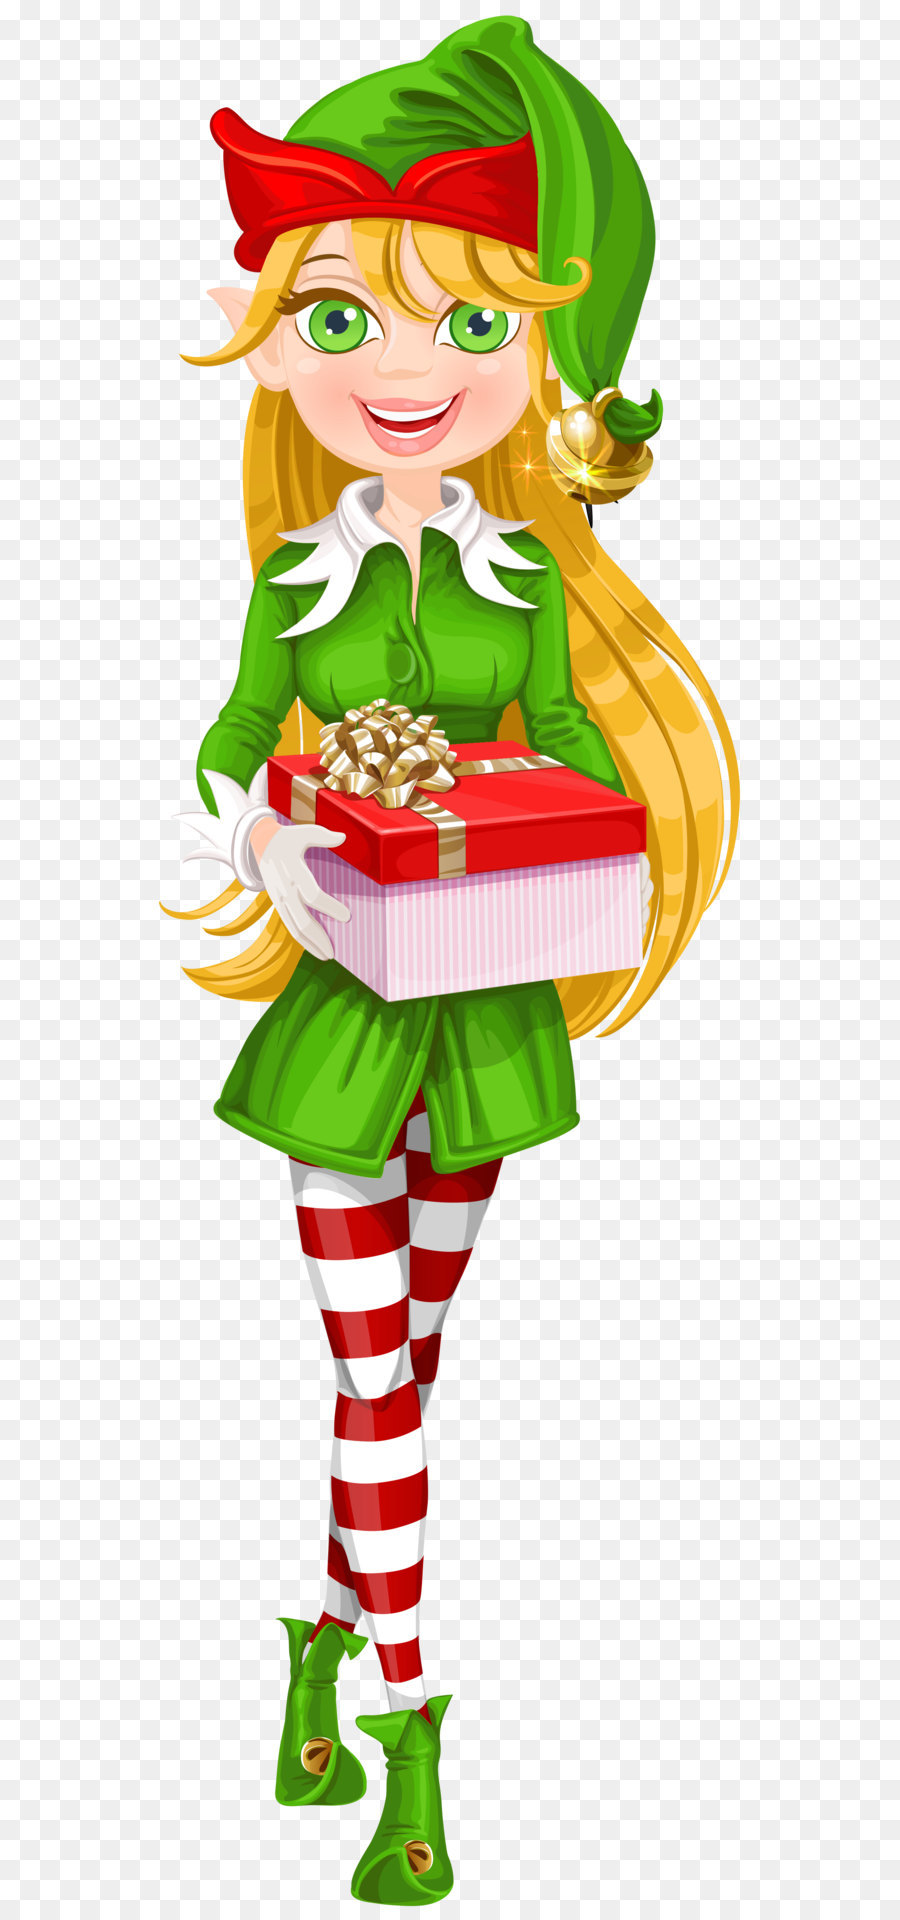 The Elf on the Shelf Santa Claus Christmas elf Clip art - Christmas Elf Transparent PNG Clip Art Image png download - 1714*5059 - Free Transparent Rudolph png Download.